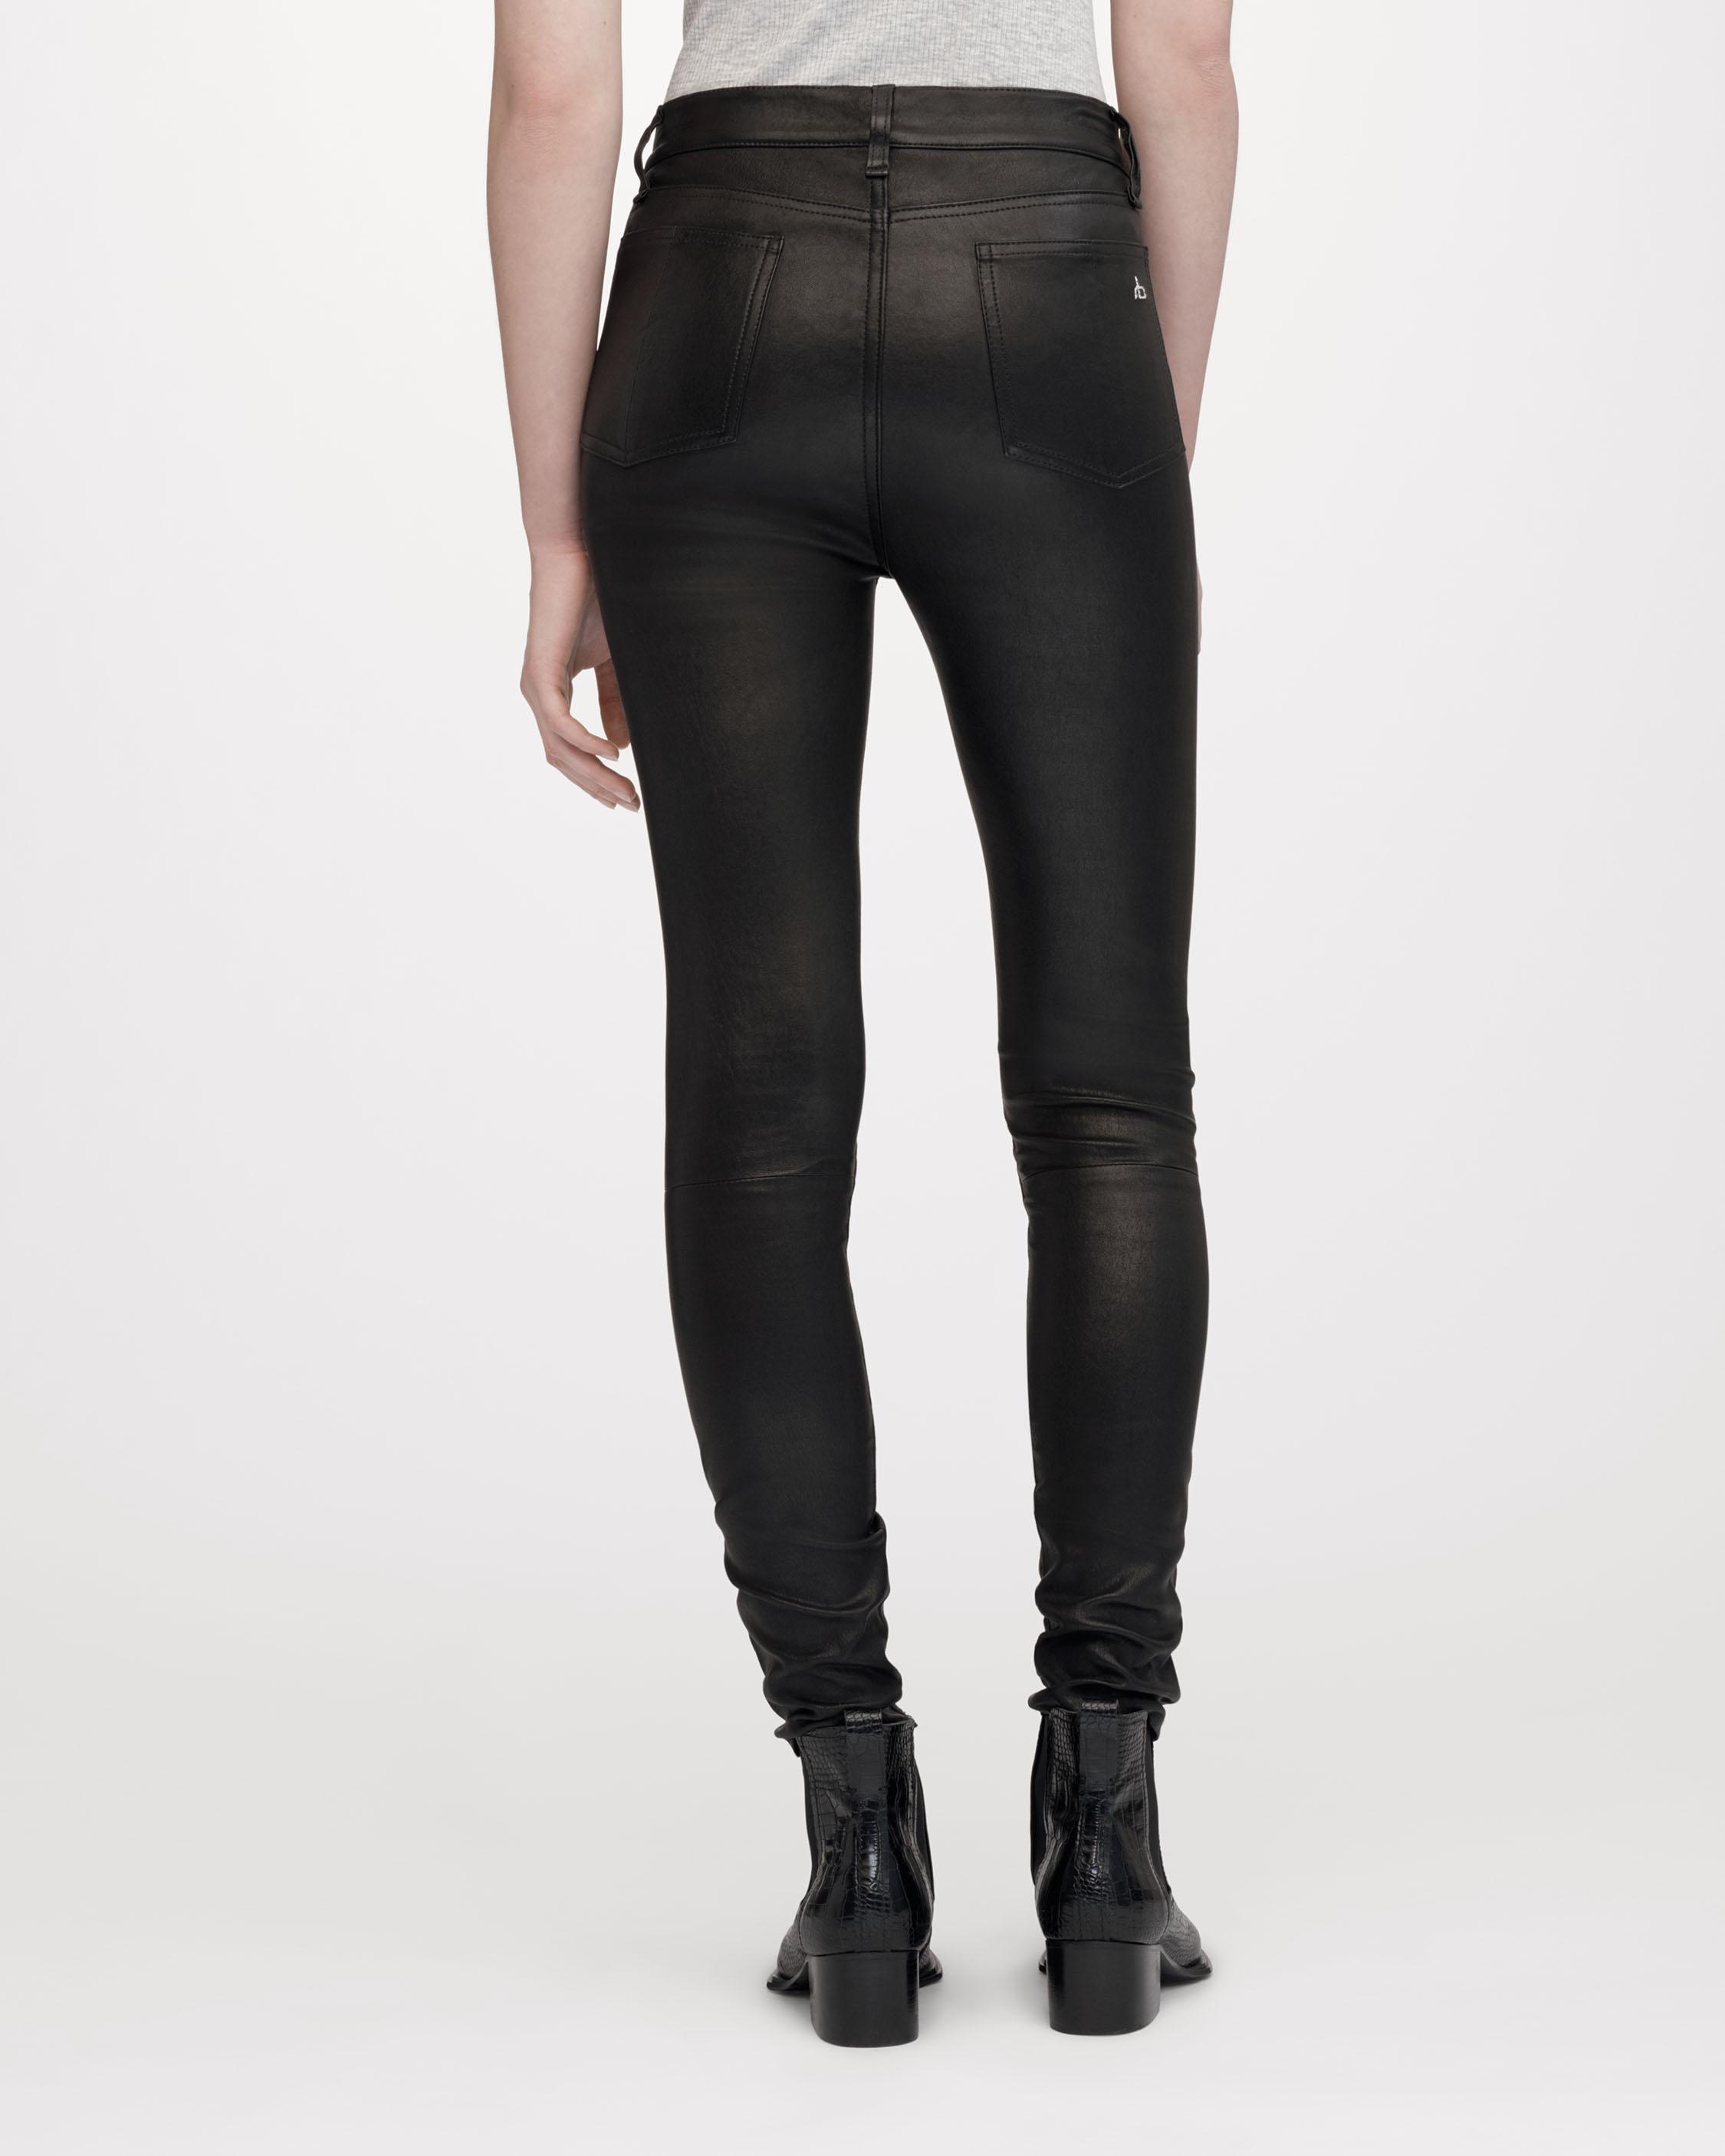 black skinny leather jeans